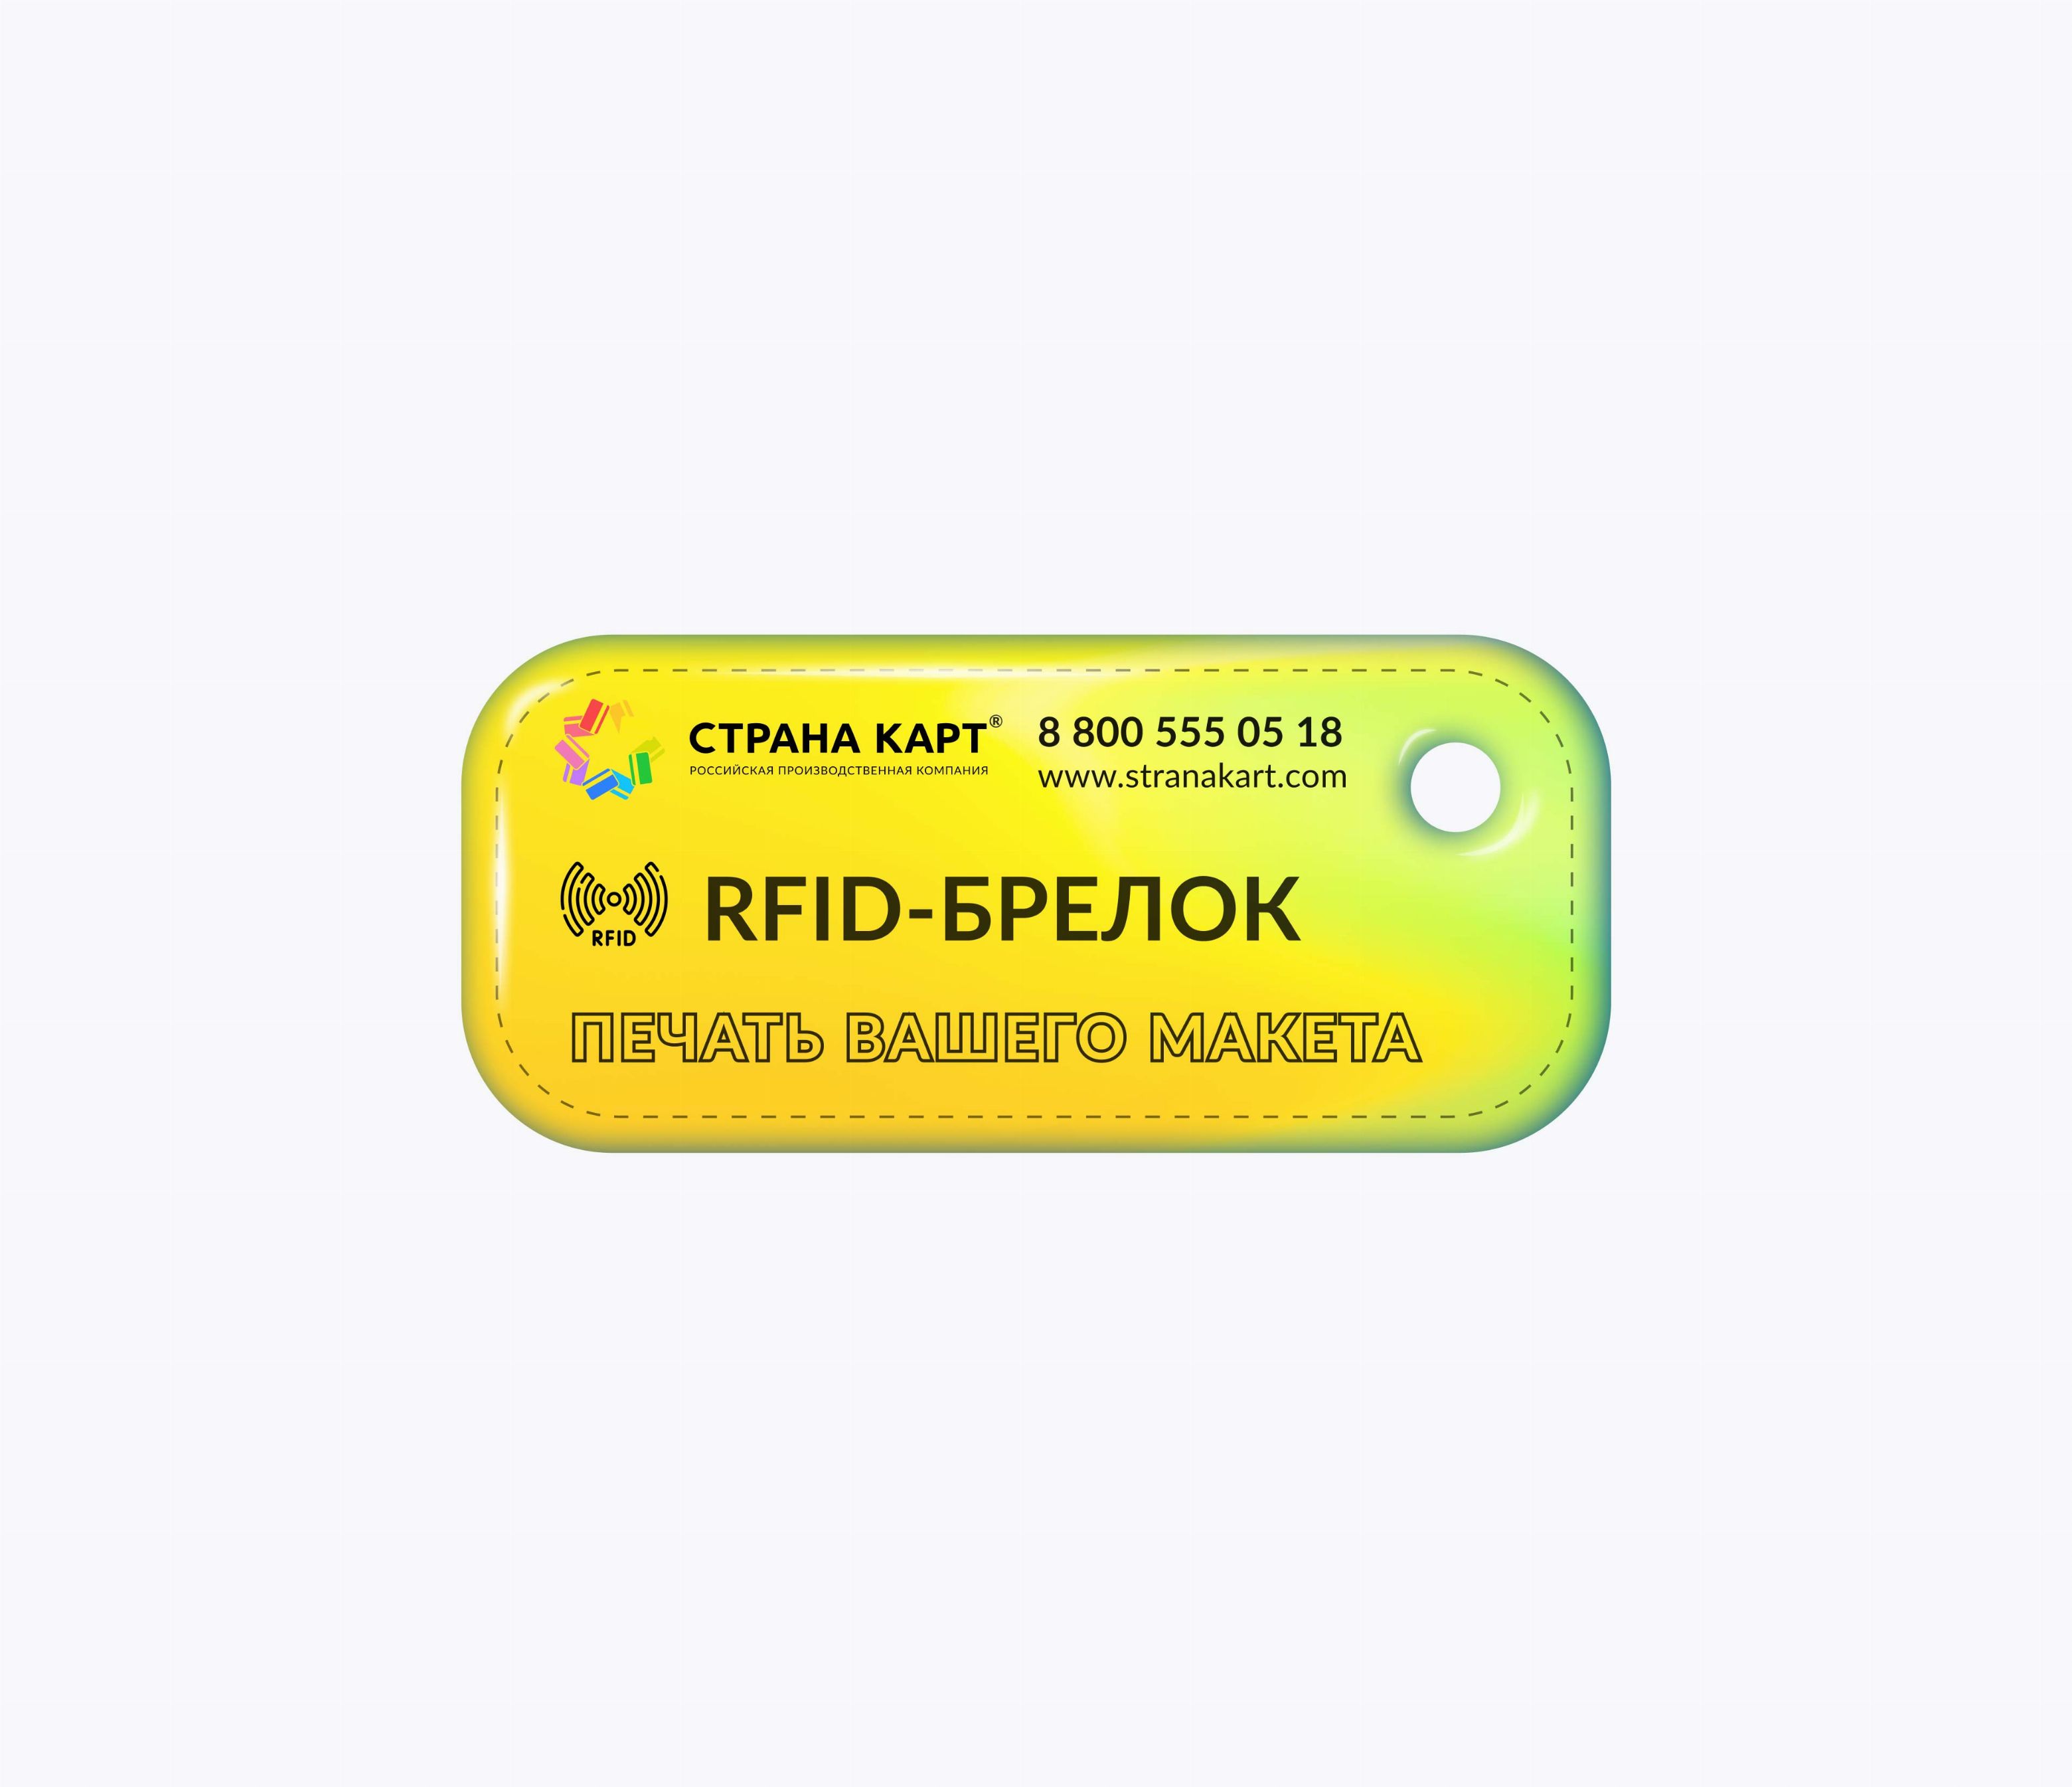 Прямоугольные мини RFID-брелоки NEOKEY® с чипом NXP MIFARE Classic EV1 7 byte UID RFID-брелоки NEOKEY® с чипом NXP MIFARE Classic EV1 7 byte UID и вашим логотипом